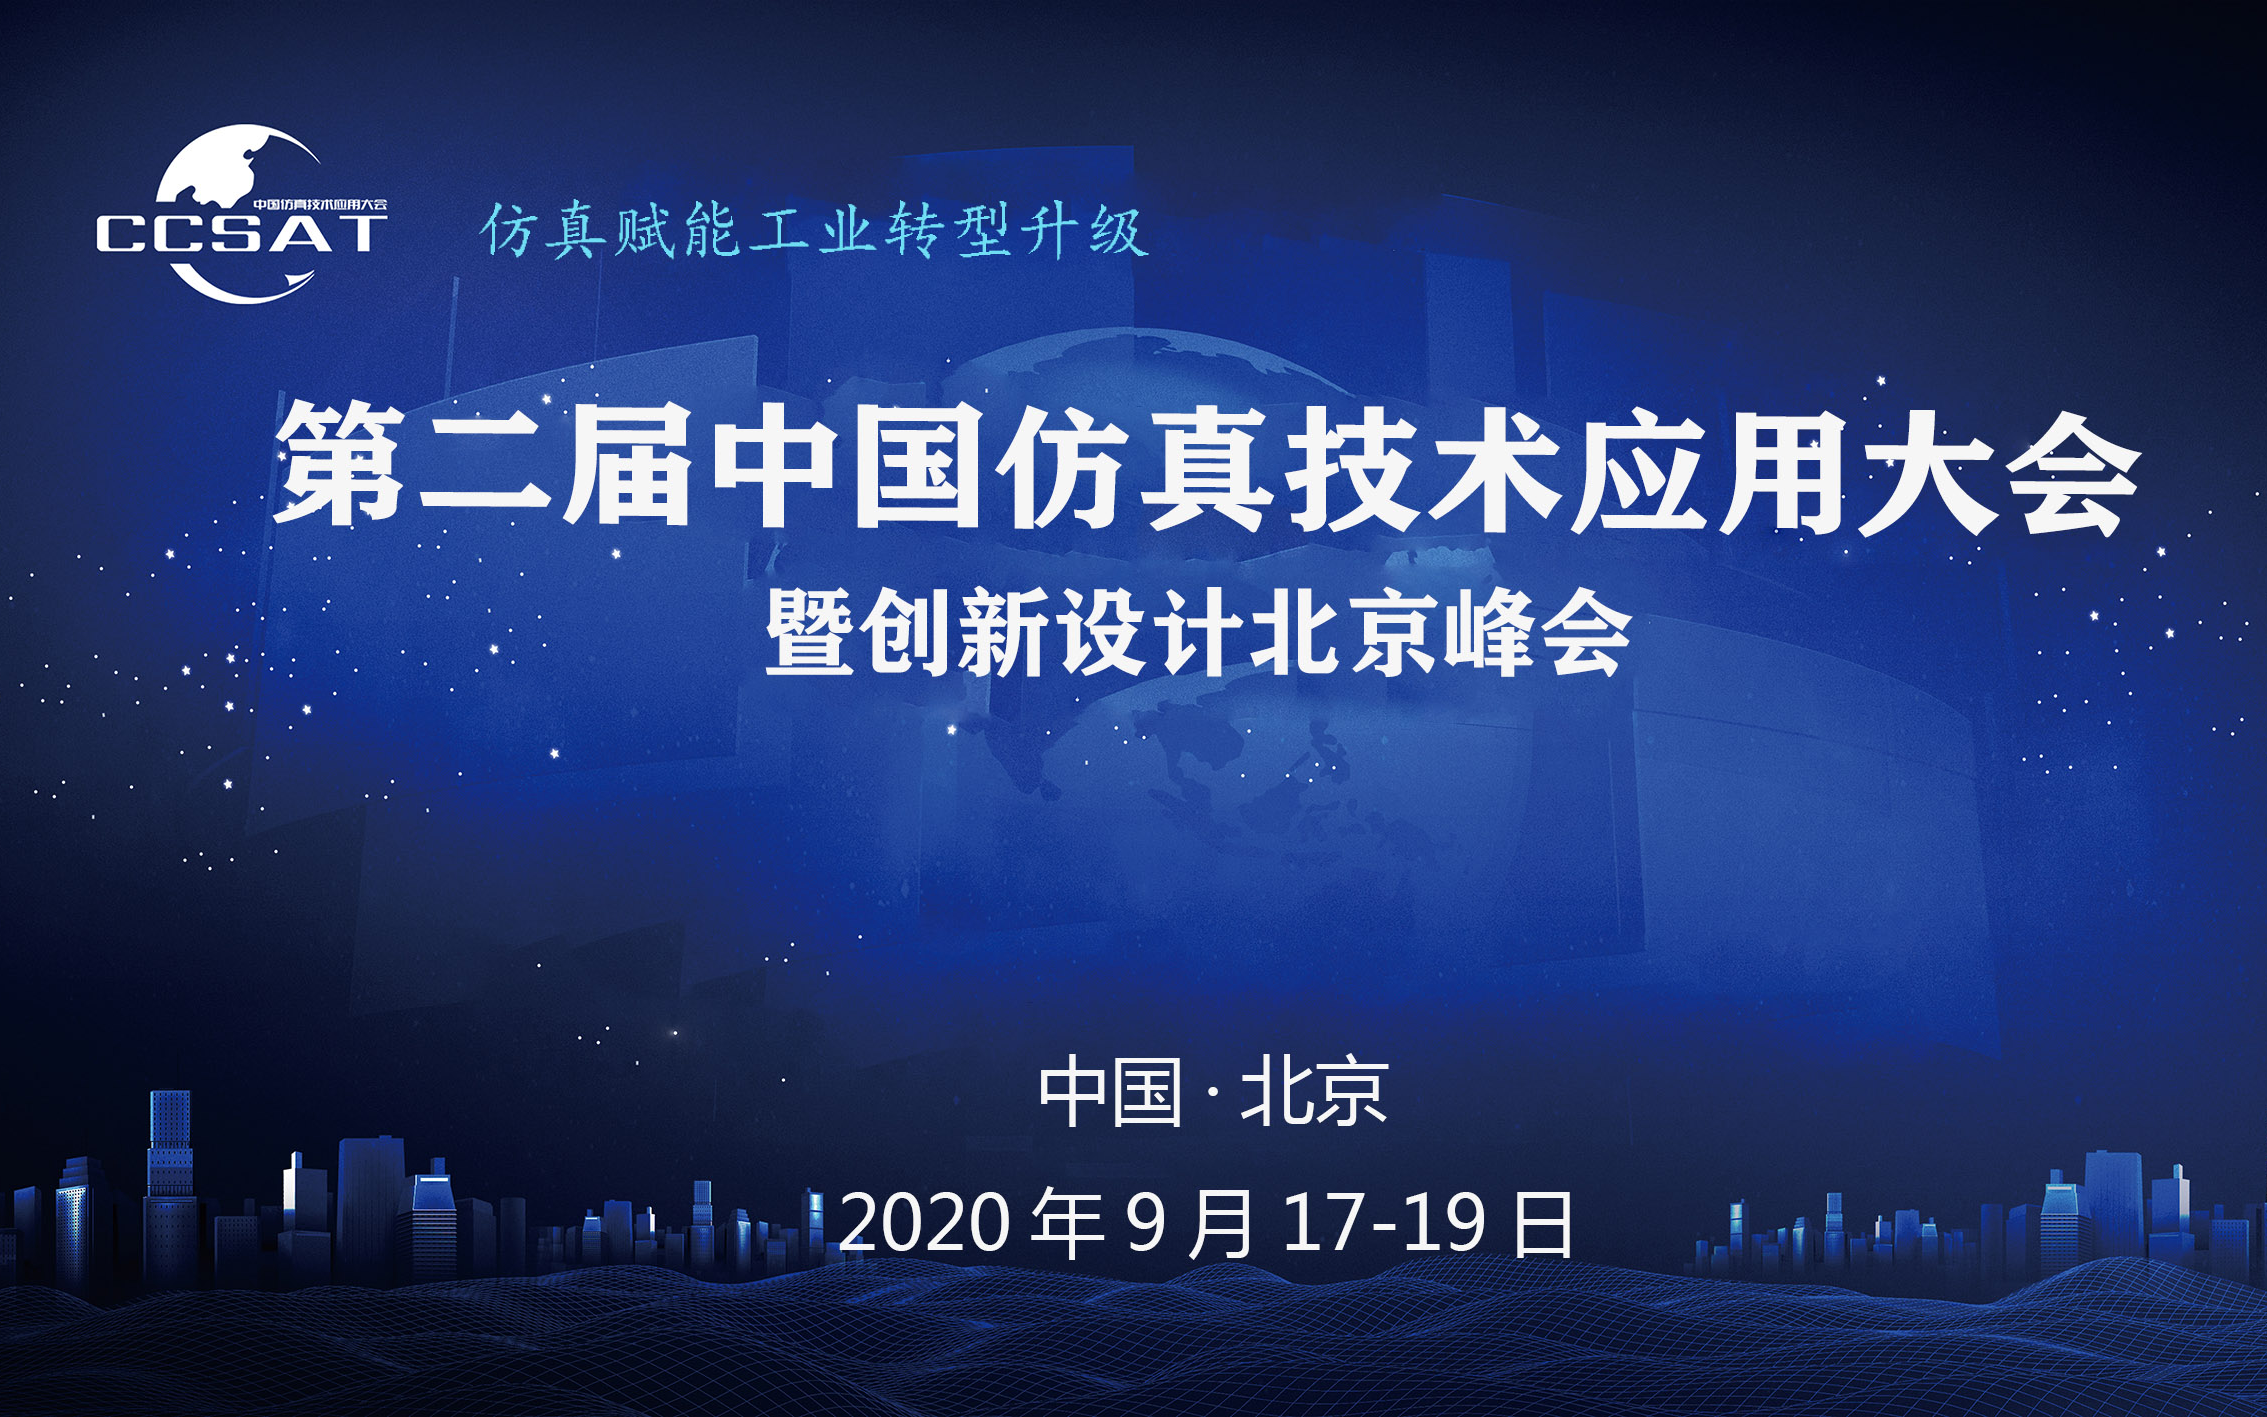  CCSAT2020第二届中国仿真技术应用大会暨创新设计北京峰会